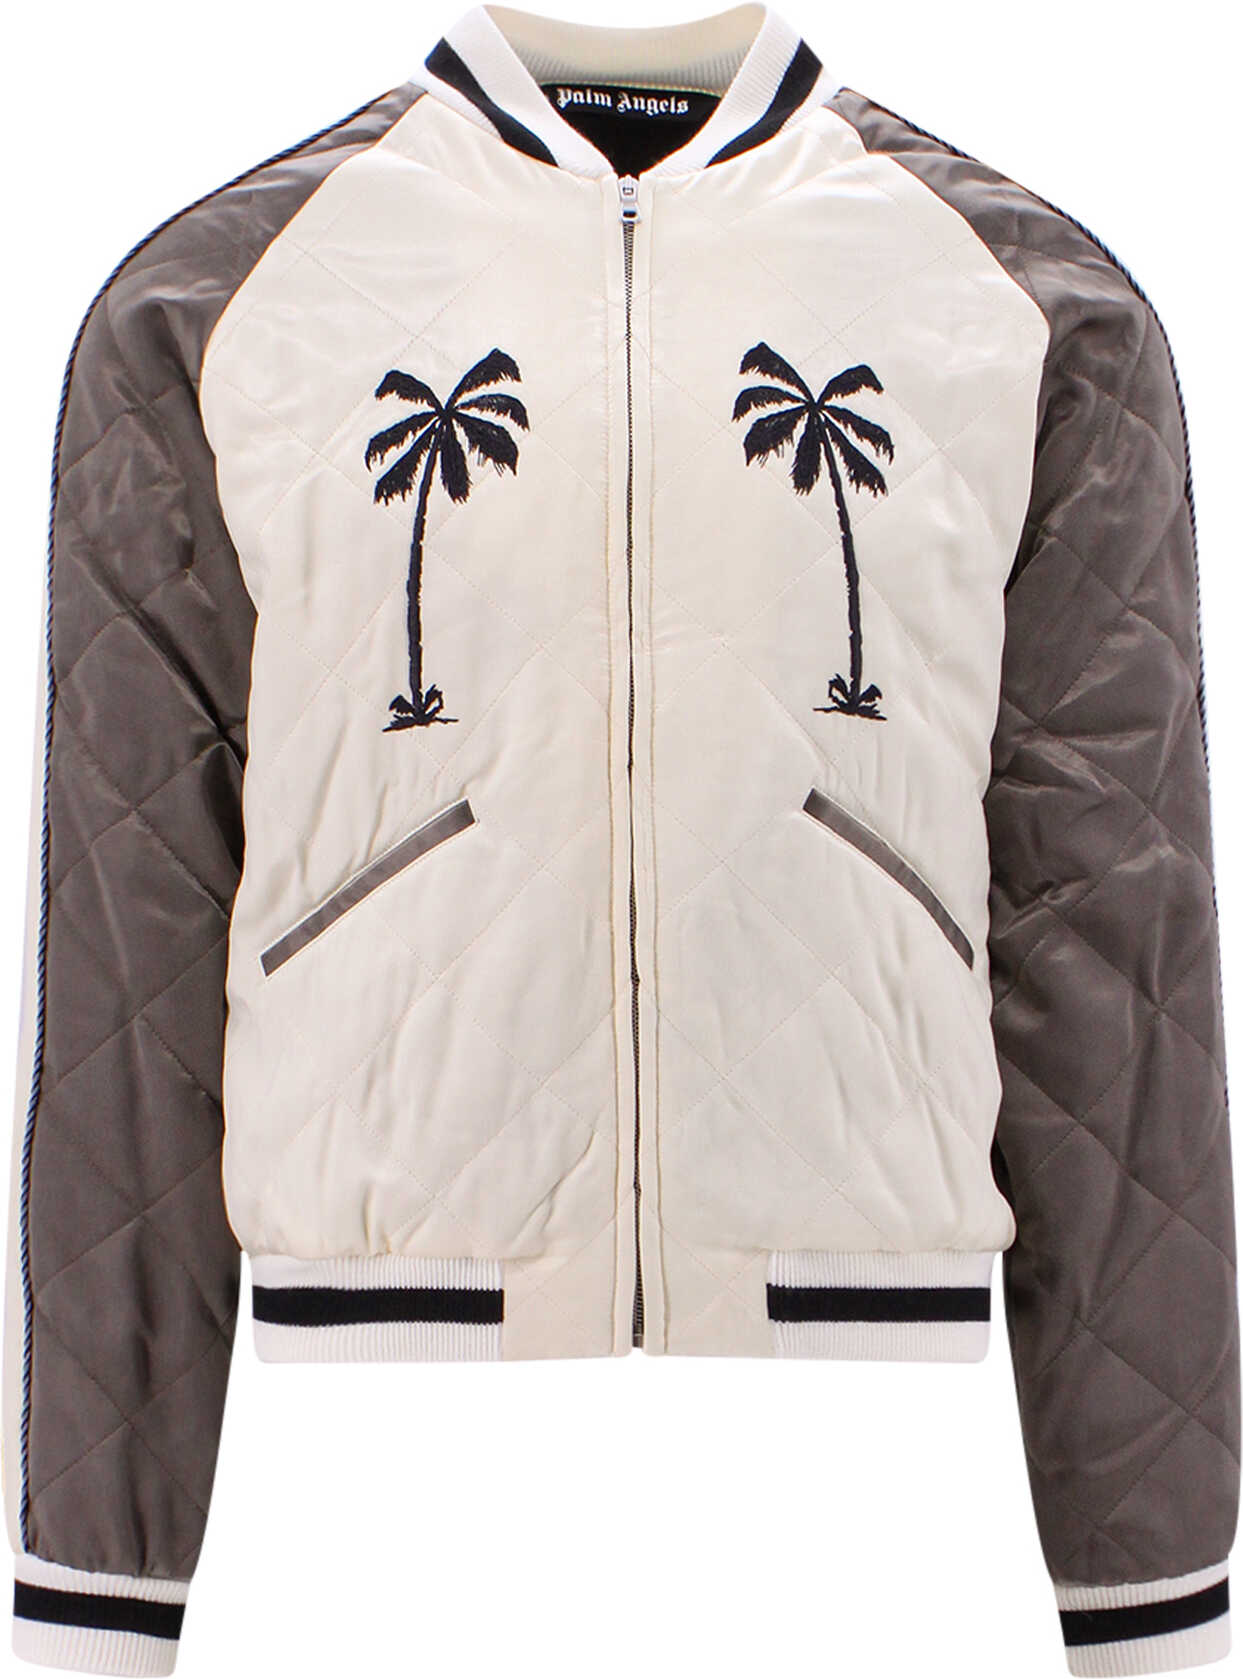 Palm Angels Jacket Beige